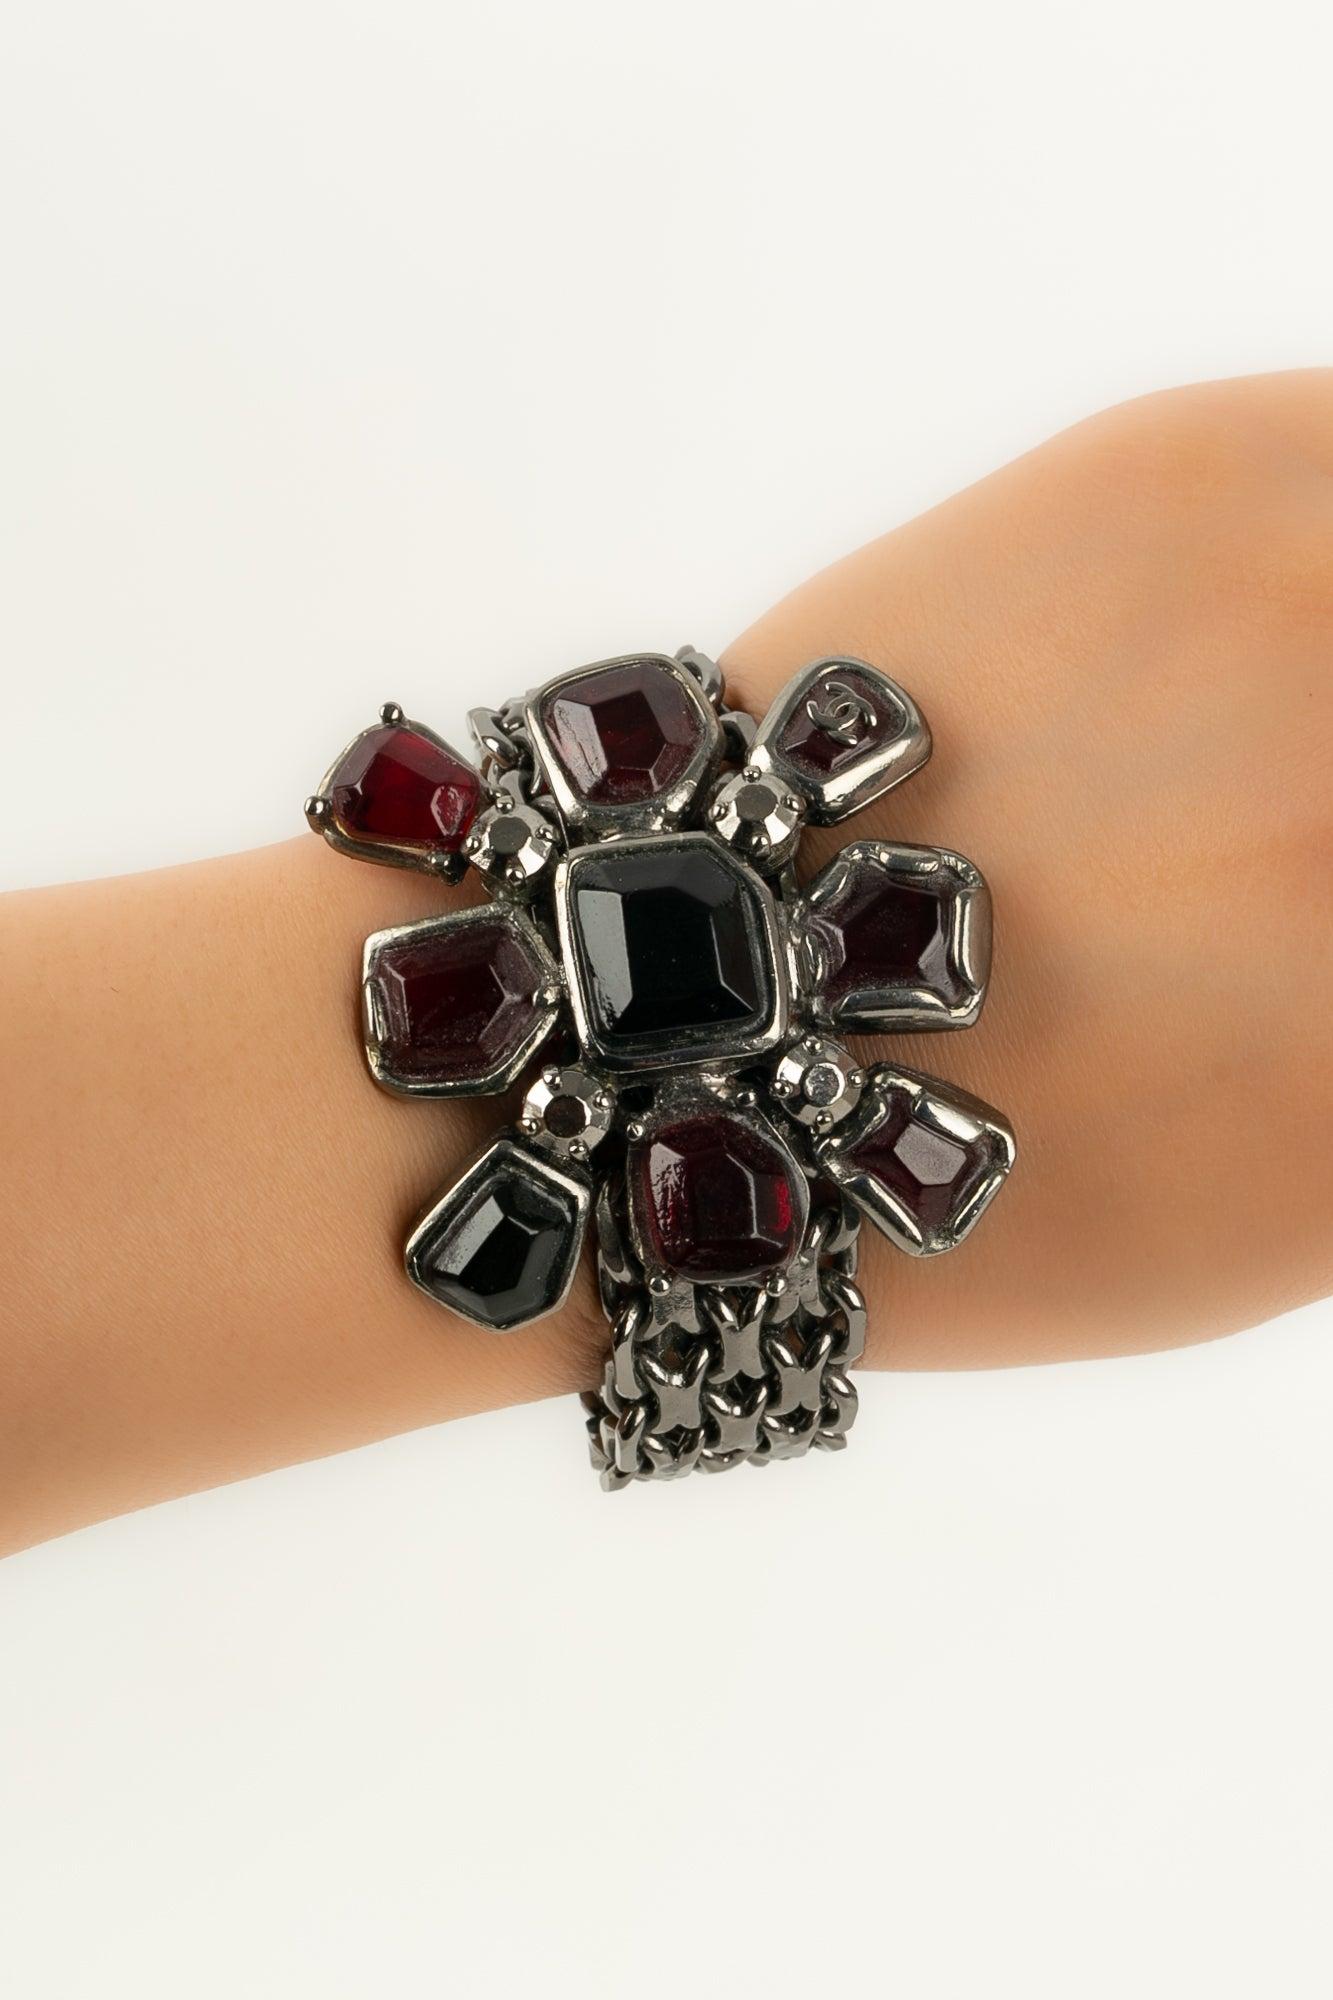 Chanel Bracelet in Dark Silvery Metal and Burgundy Rhinestones, 2002 For Sale 4